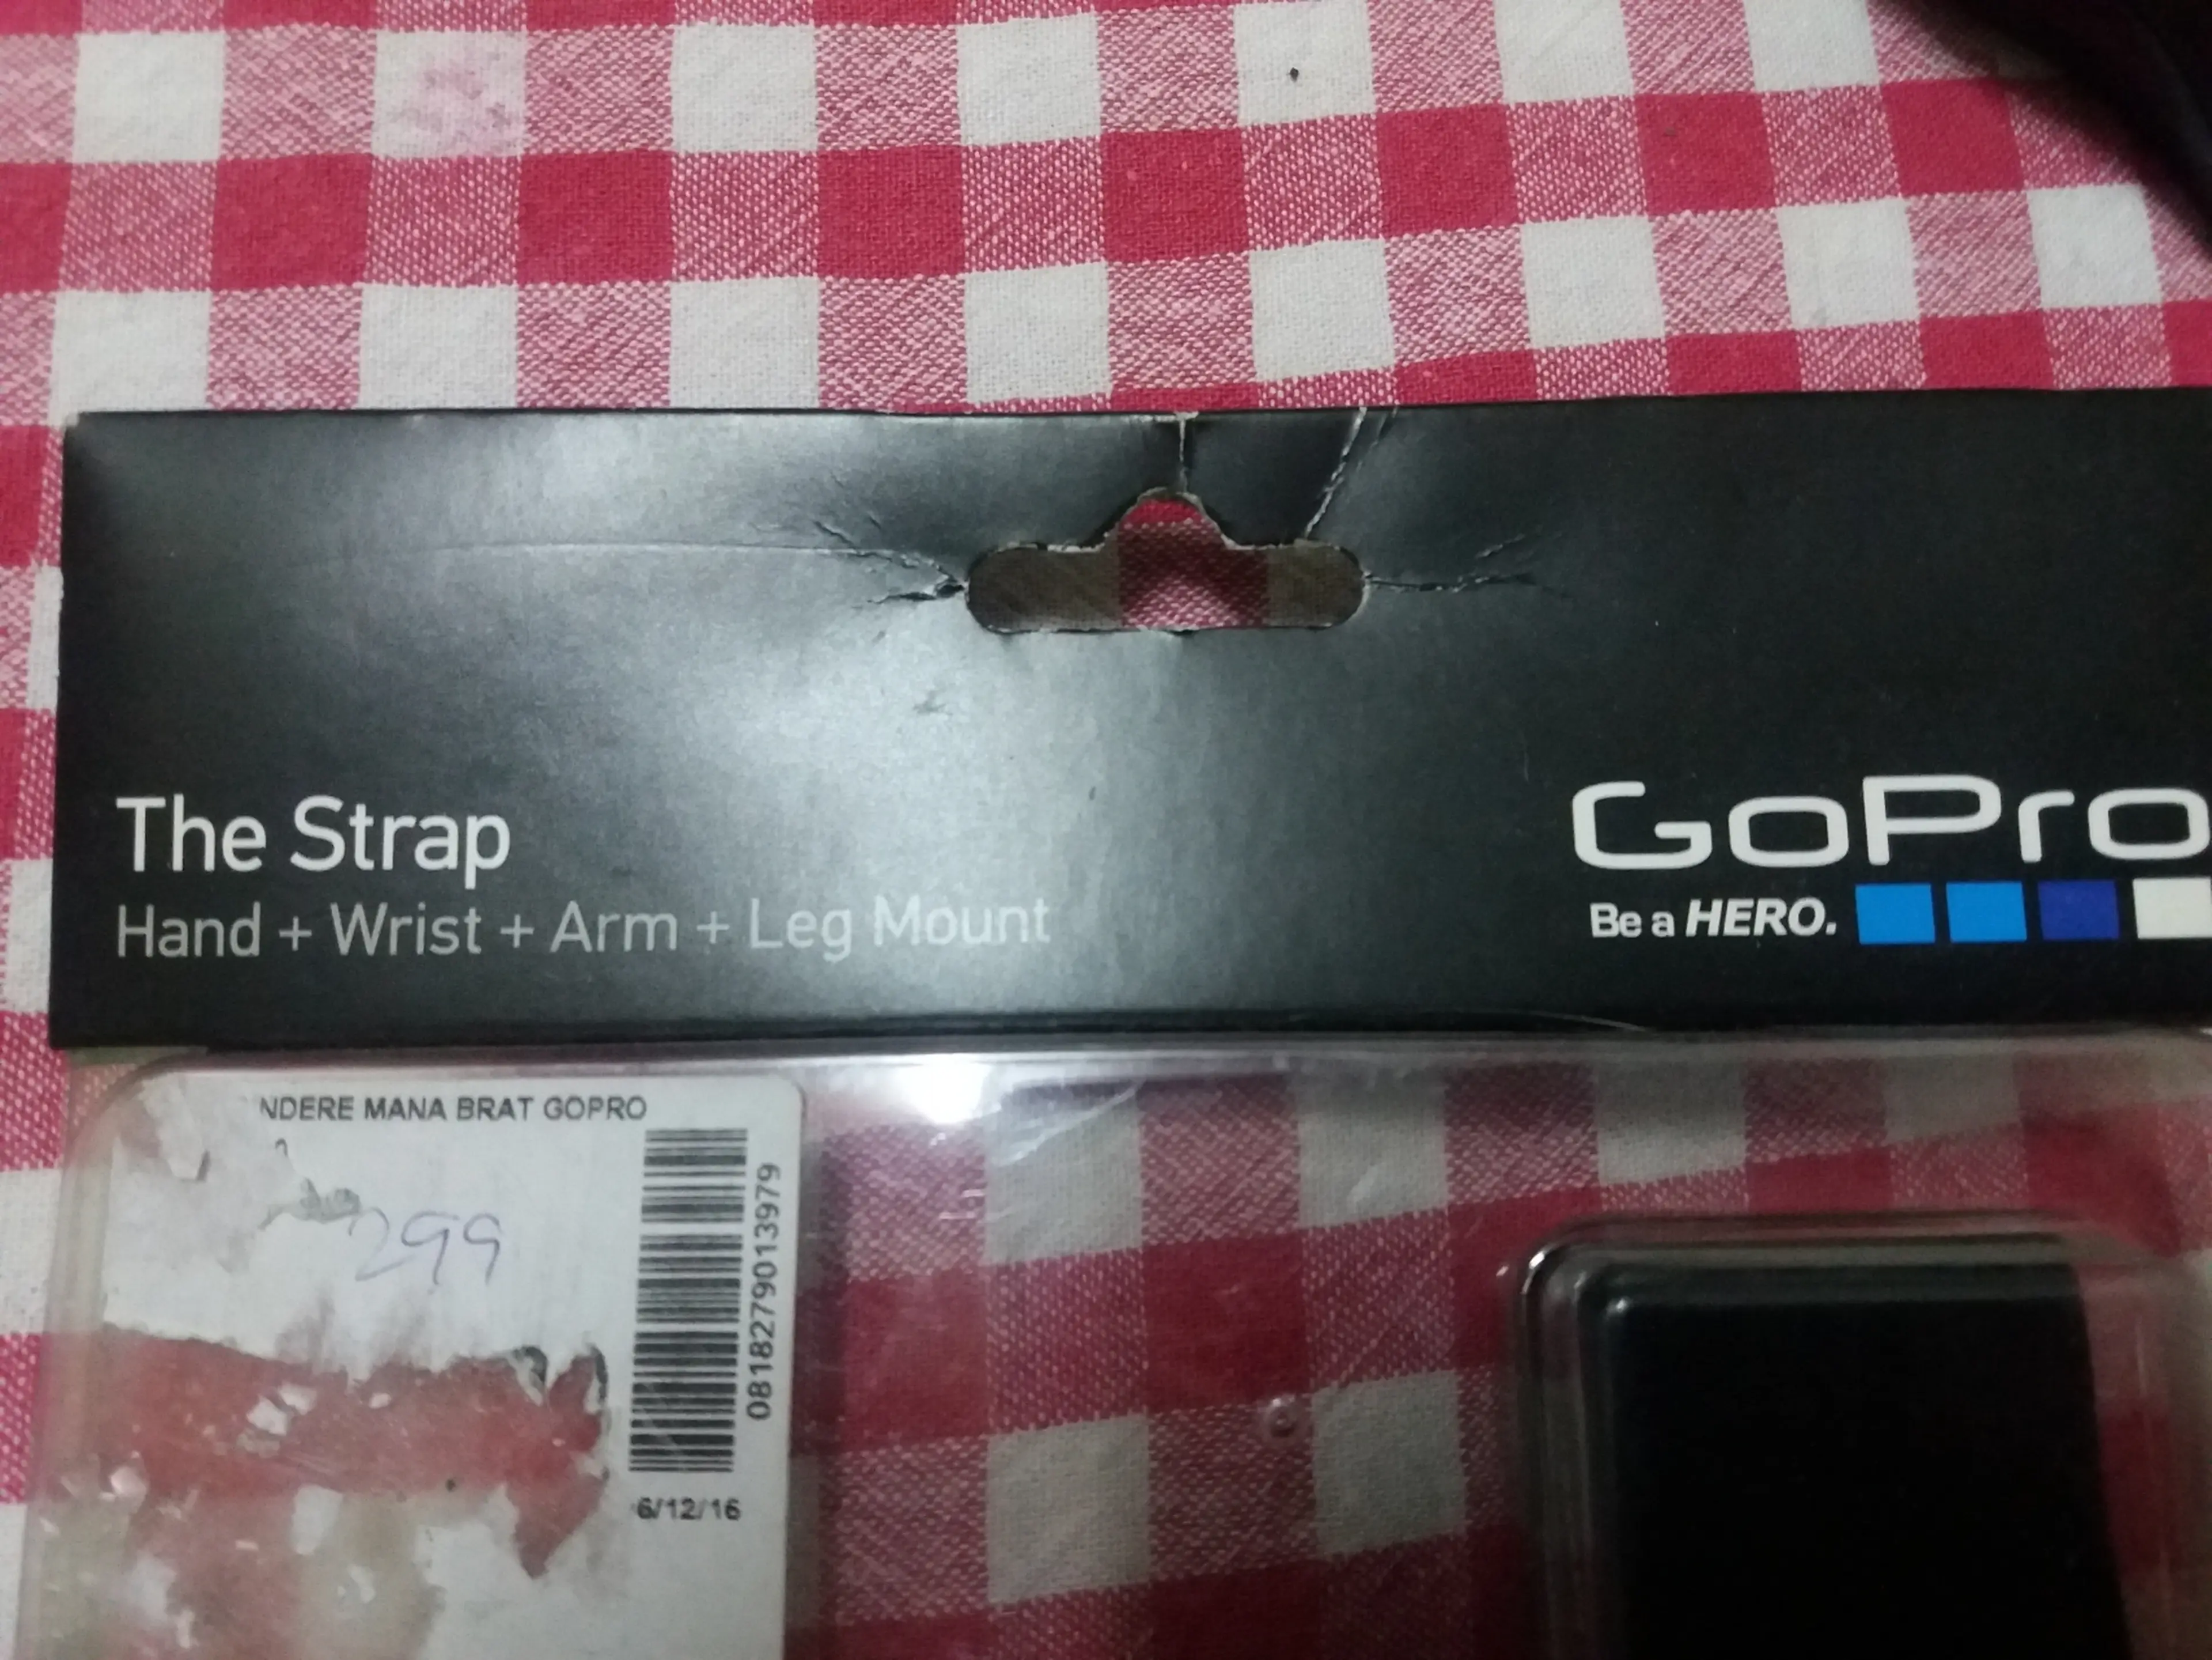 2. GoPro - The Strap Hand+Wrist+Arm+Leg Mount - bratara mana/picior 360°